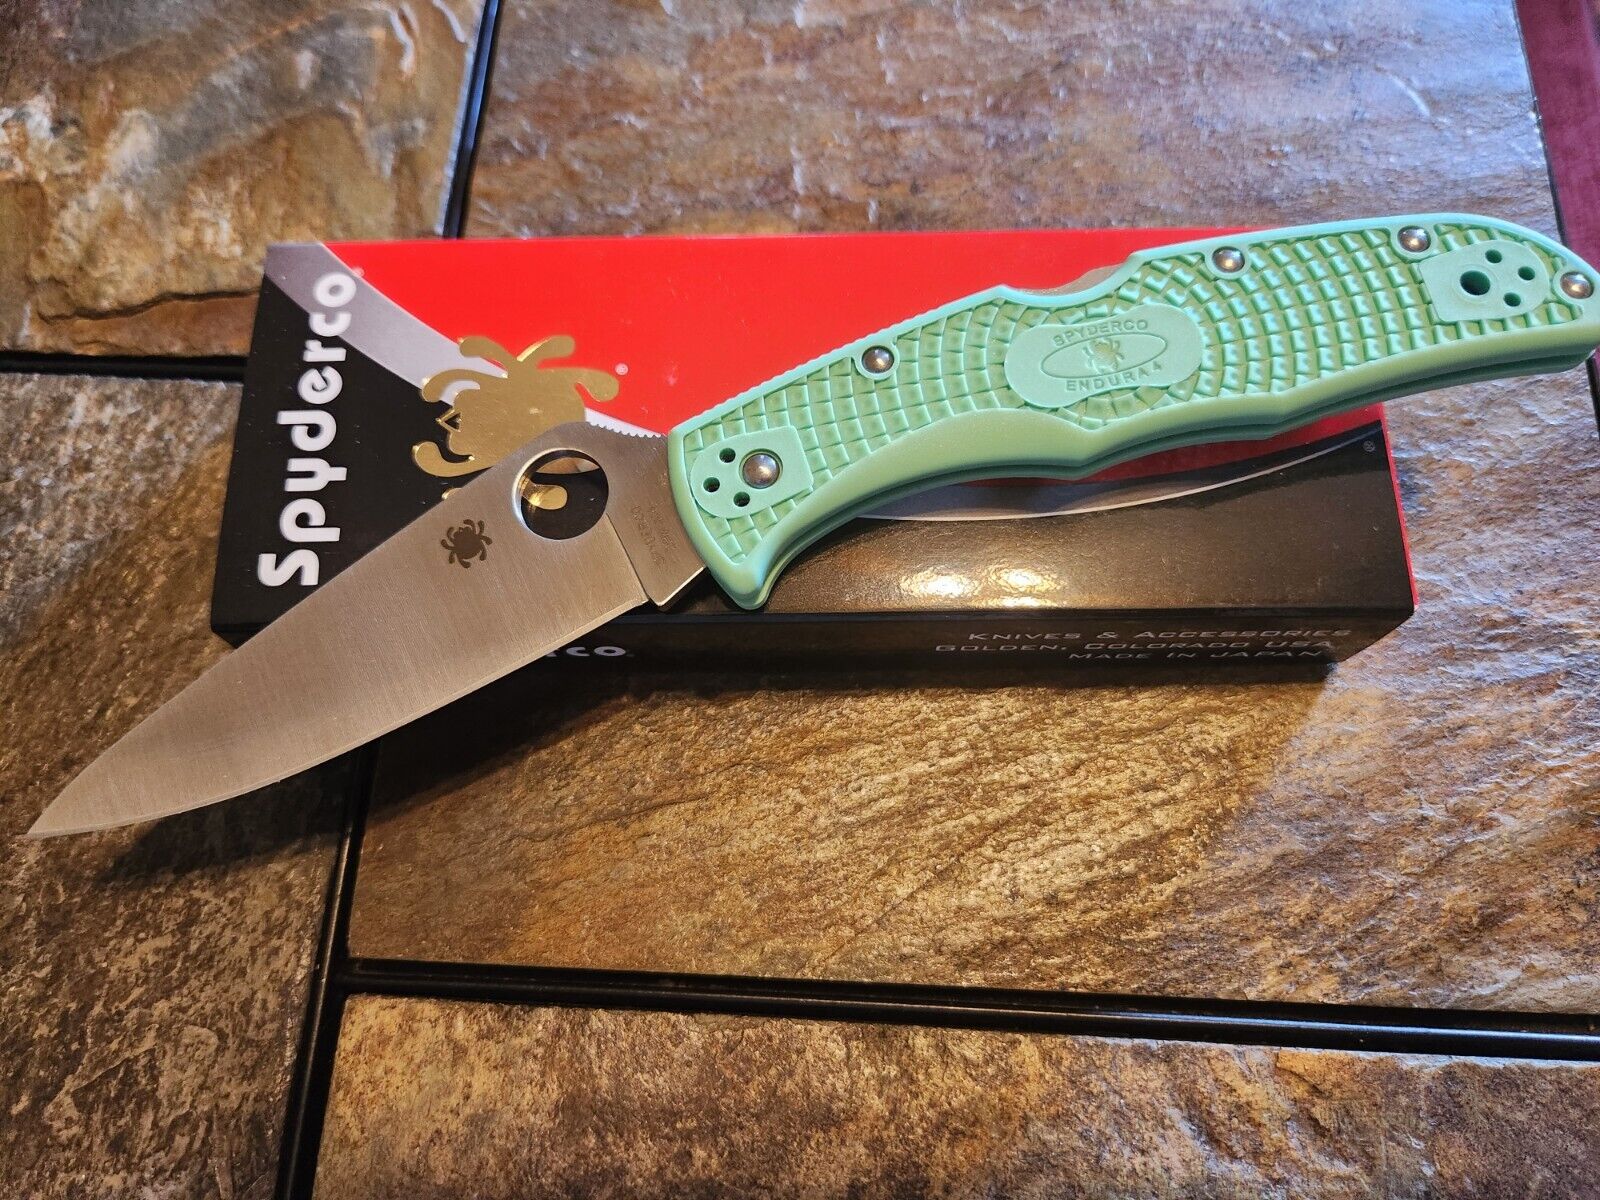 New Spyderco Endura 4 Knife Mint Green FRN Lightweight CpmM4 Plain Edge Steel